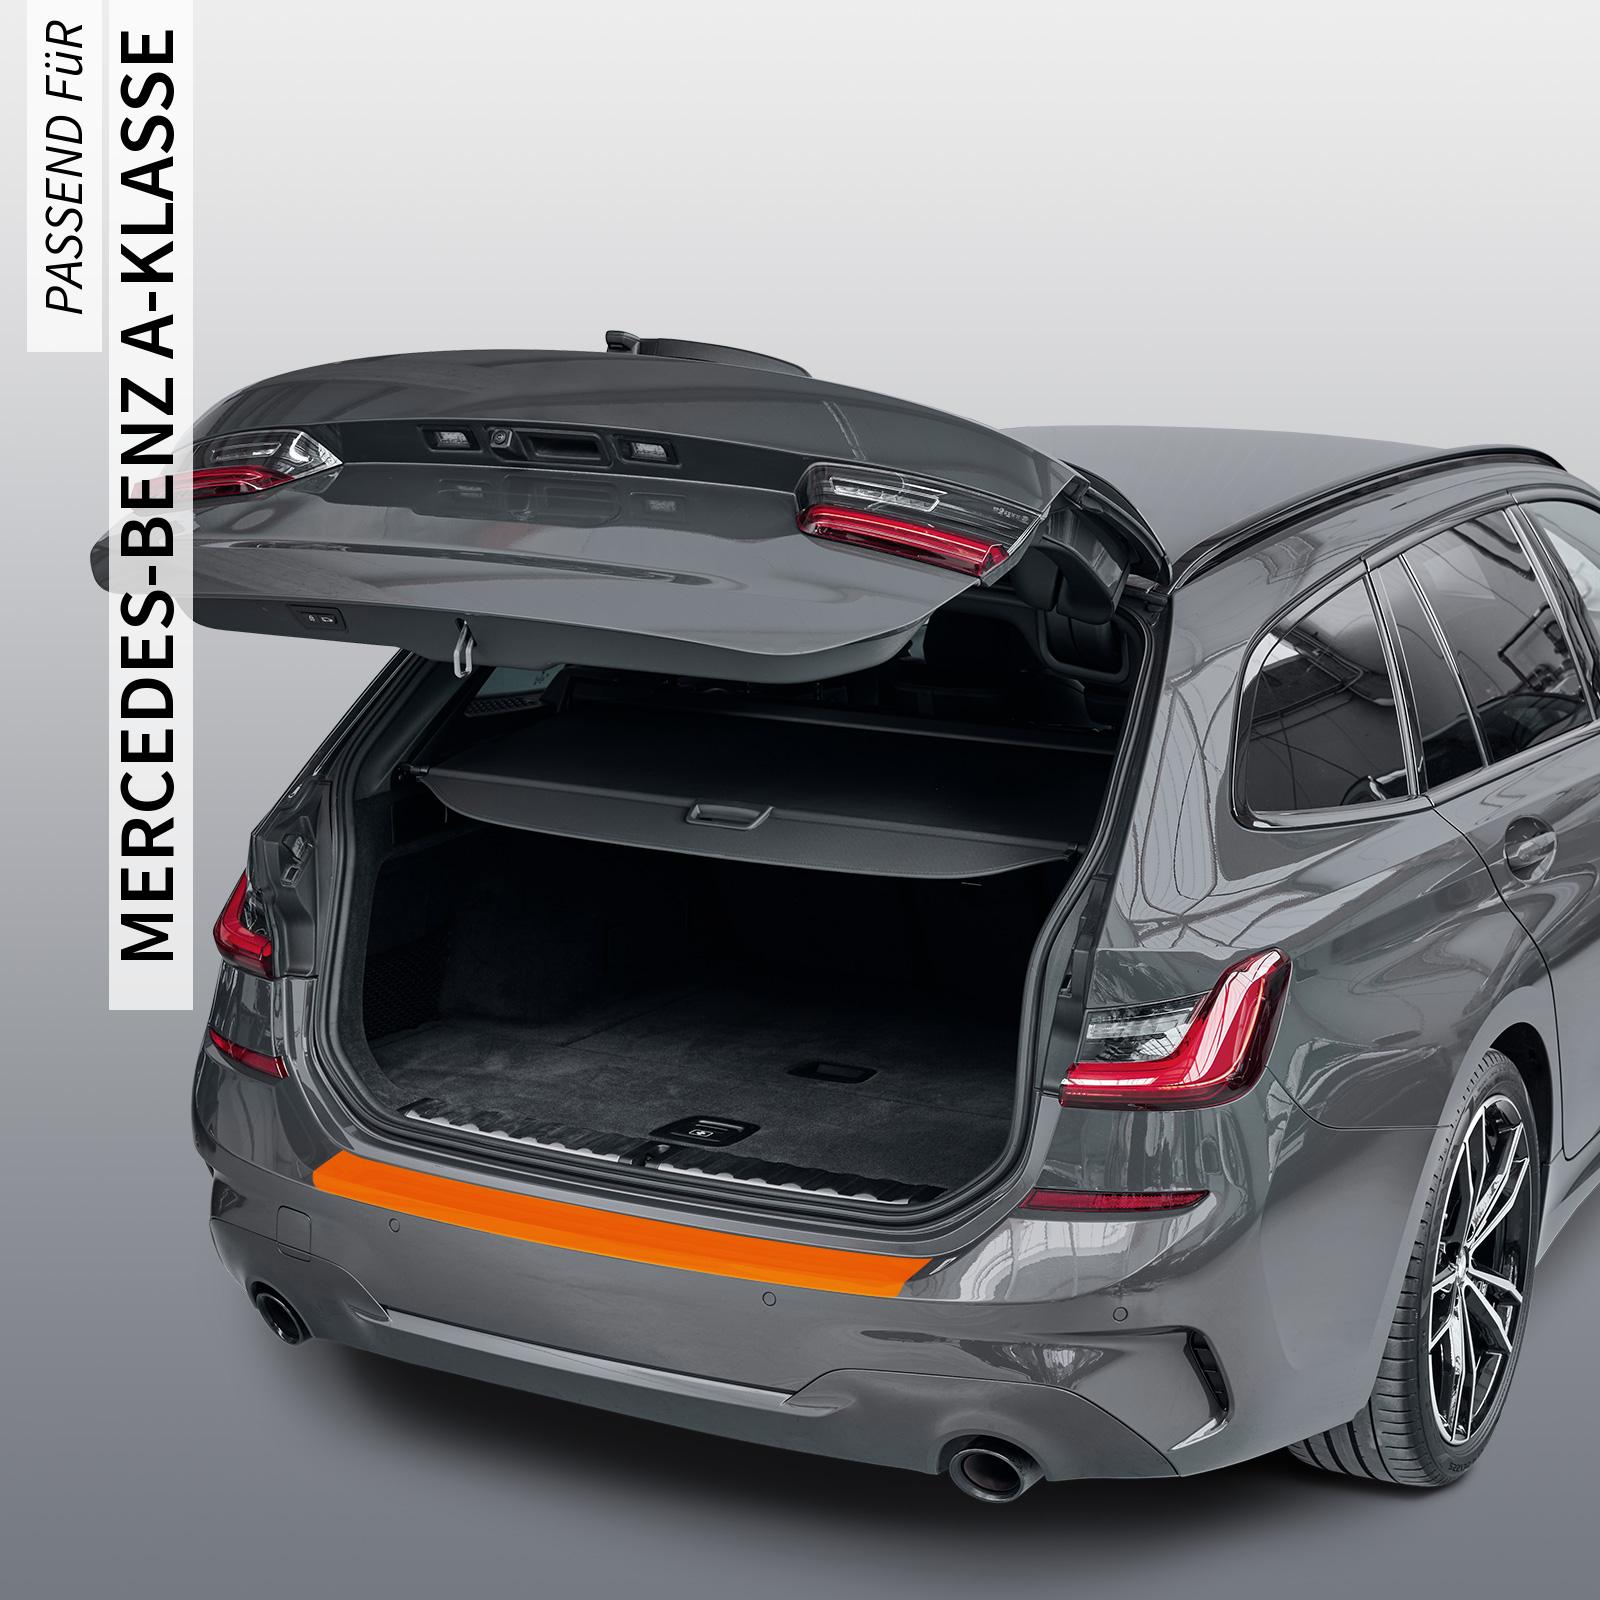 Ladekantenschutzfolie - Transparent Glatt MATT 110 µm stark  für Mercedes-Benz A-Klasse Typ W169, BJ 2004-10/2012